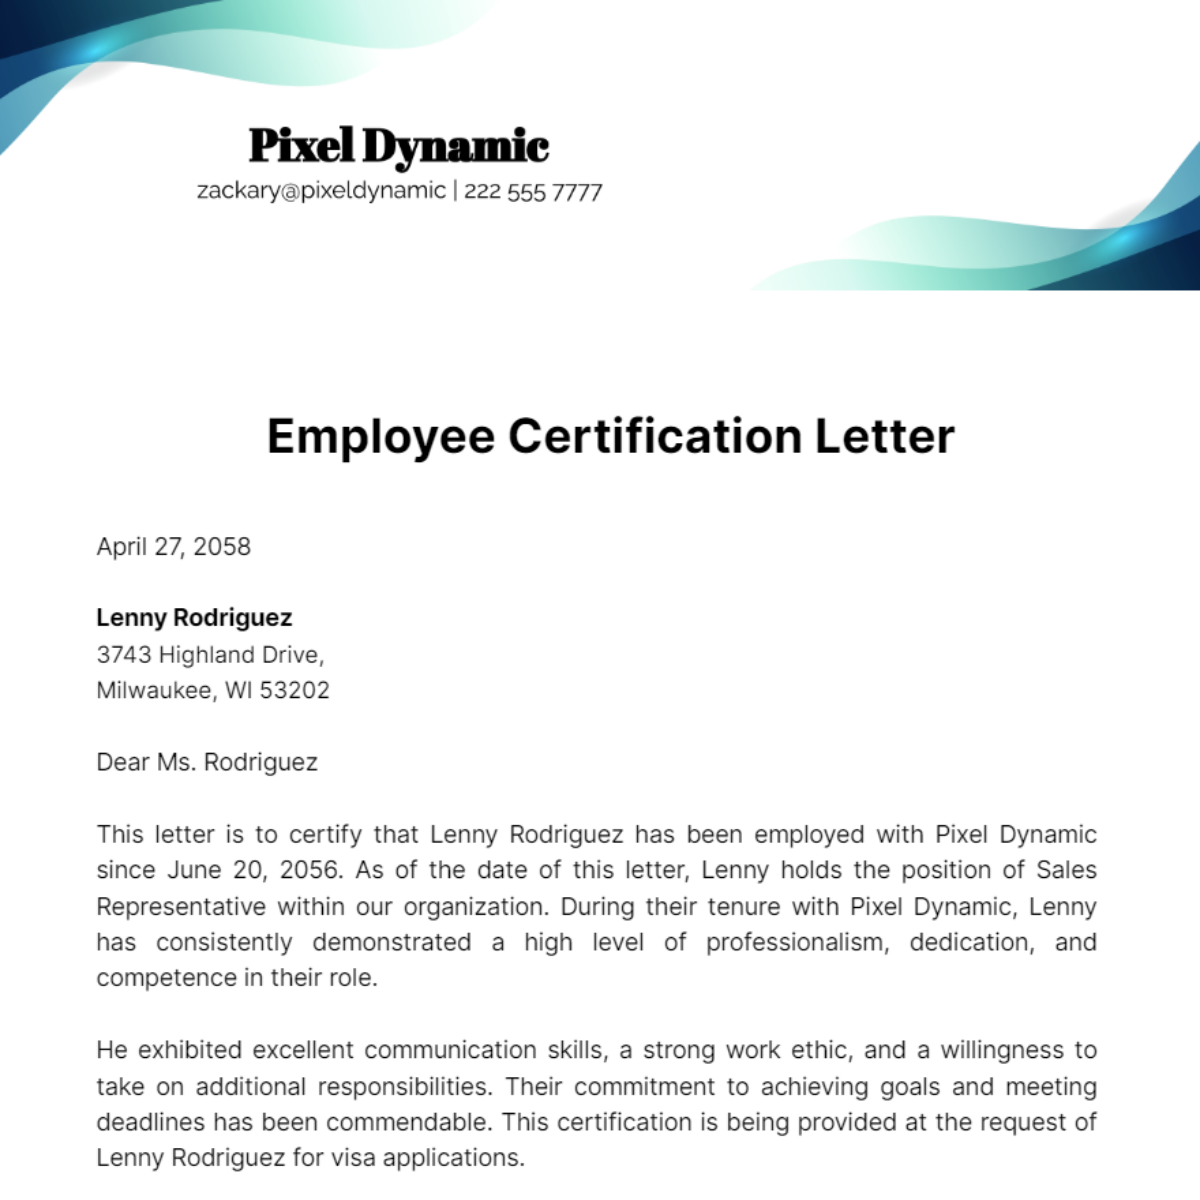 Employee Certification Letter Template